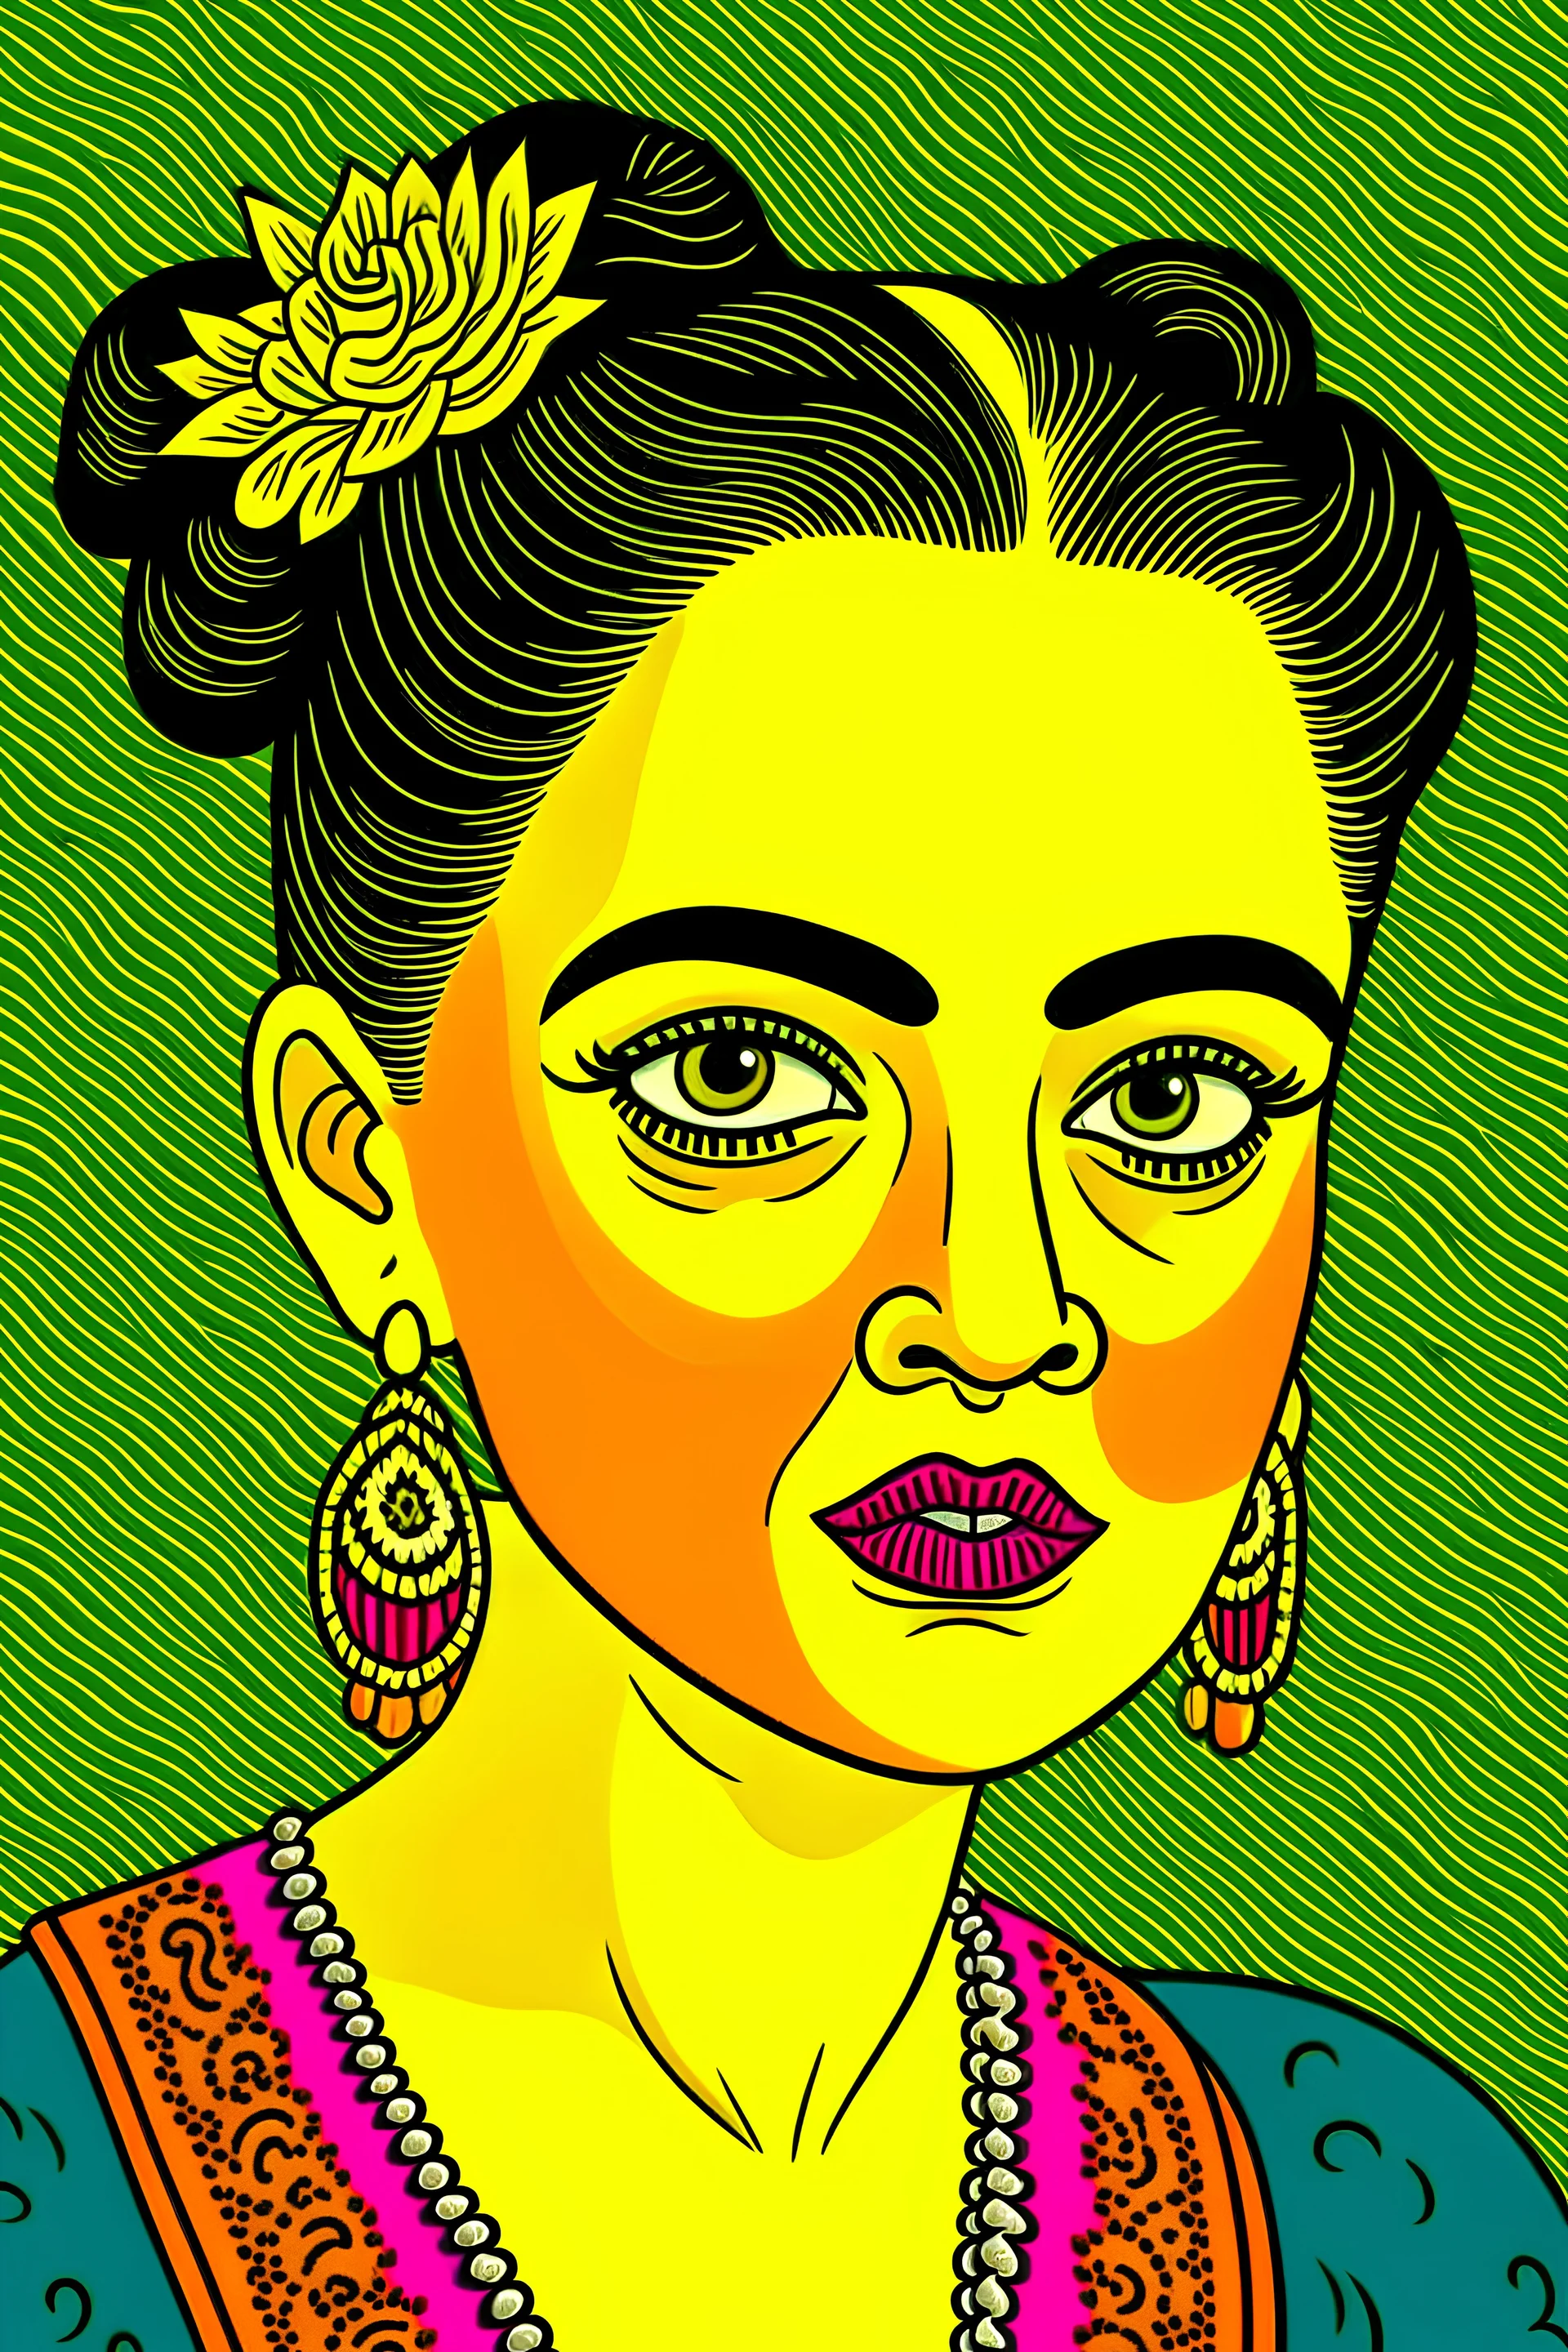 Draw an original cartoon picture of Frida Khalo